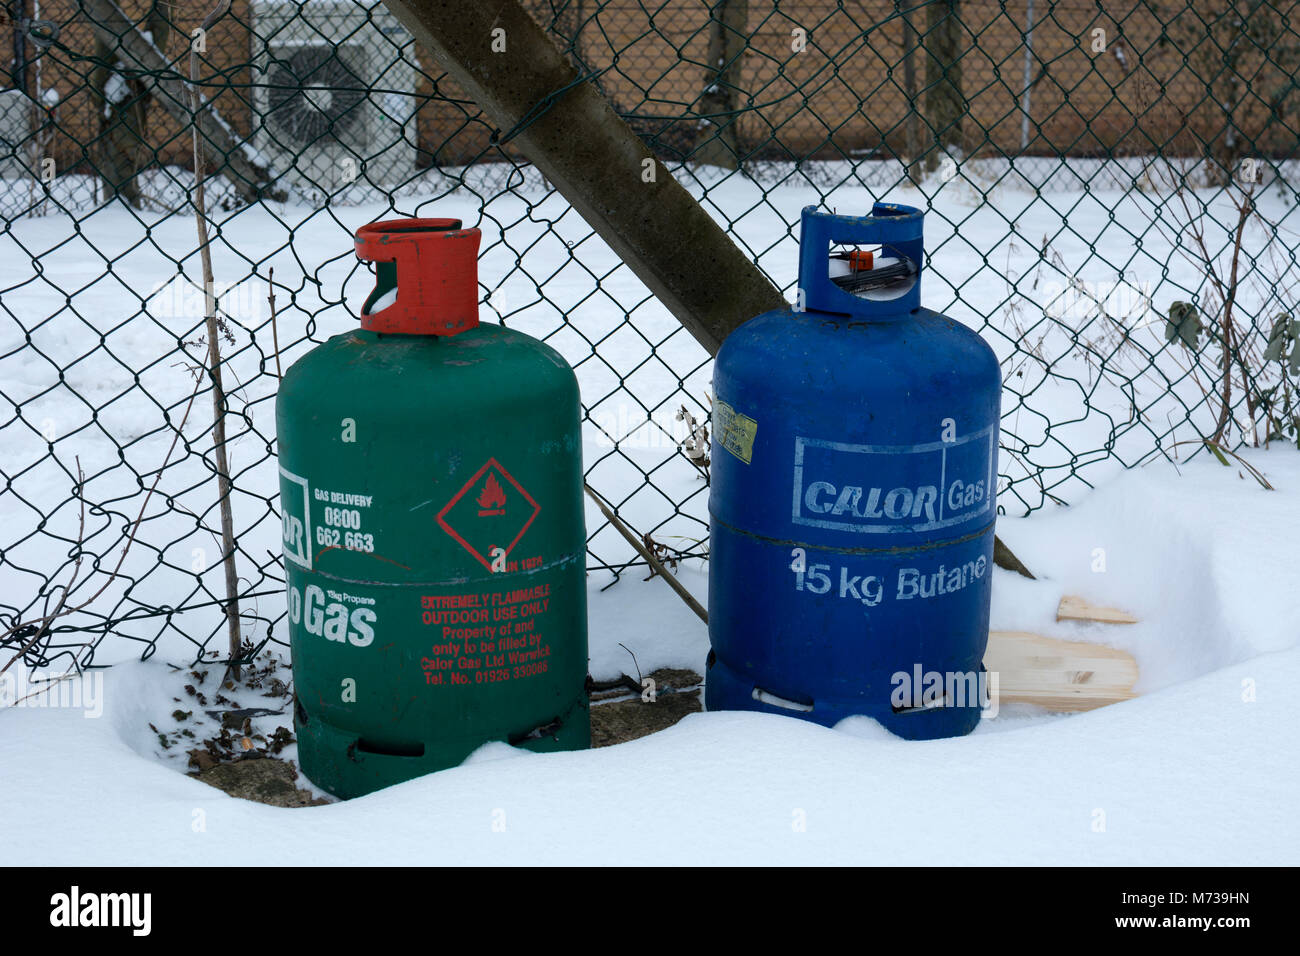 Calor Gas propane and butane bottles in snow, UK Stock Photo